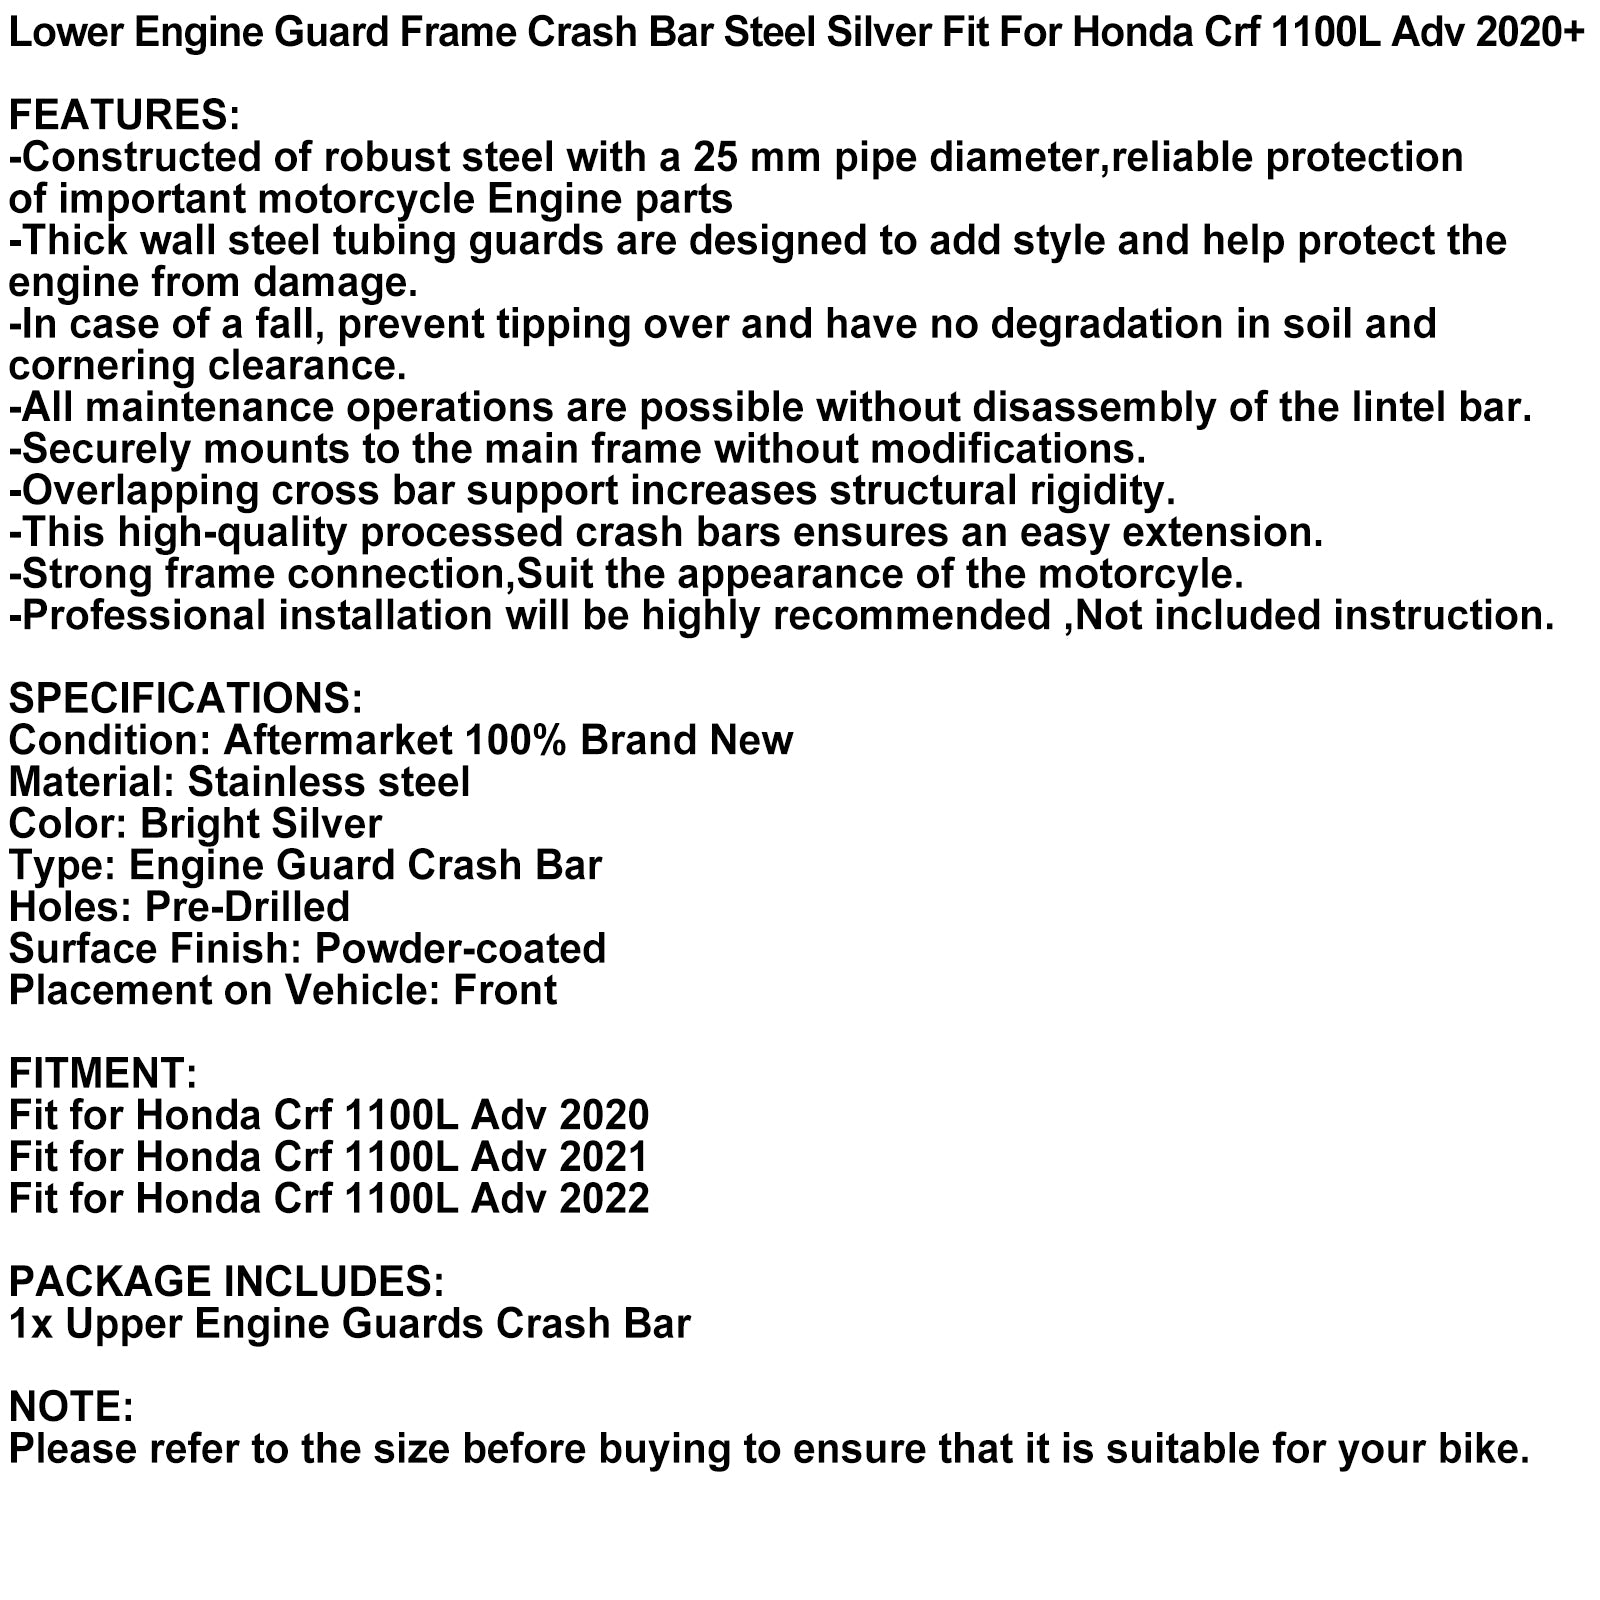 Crash Bar Lower Engine Guard Steel Frame Silver Fit For Honda Crf 1100L Adv 20+ Generic